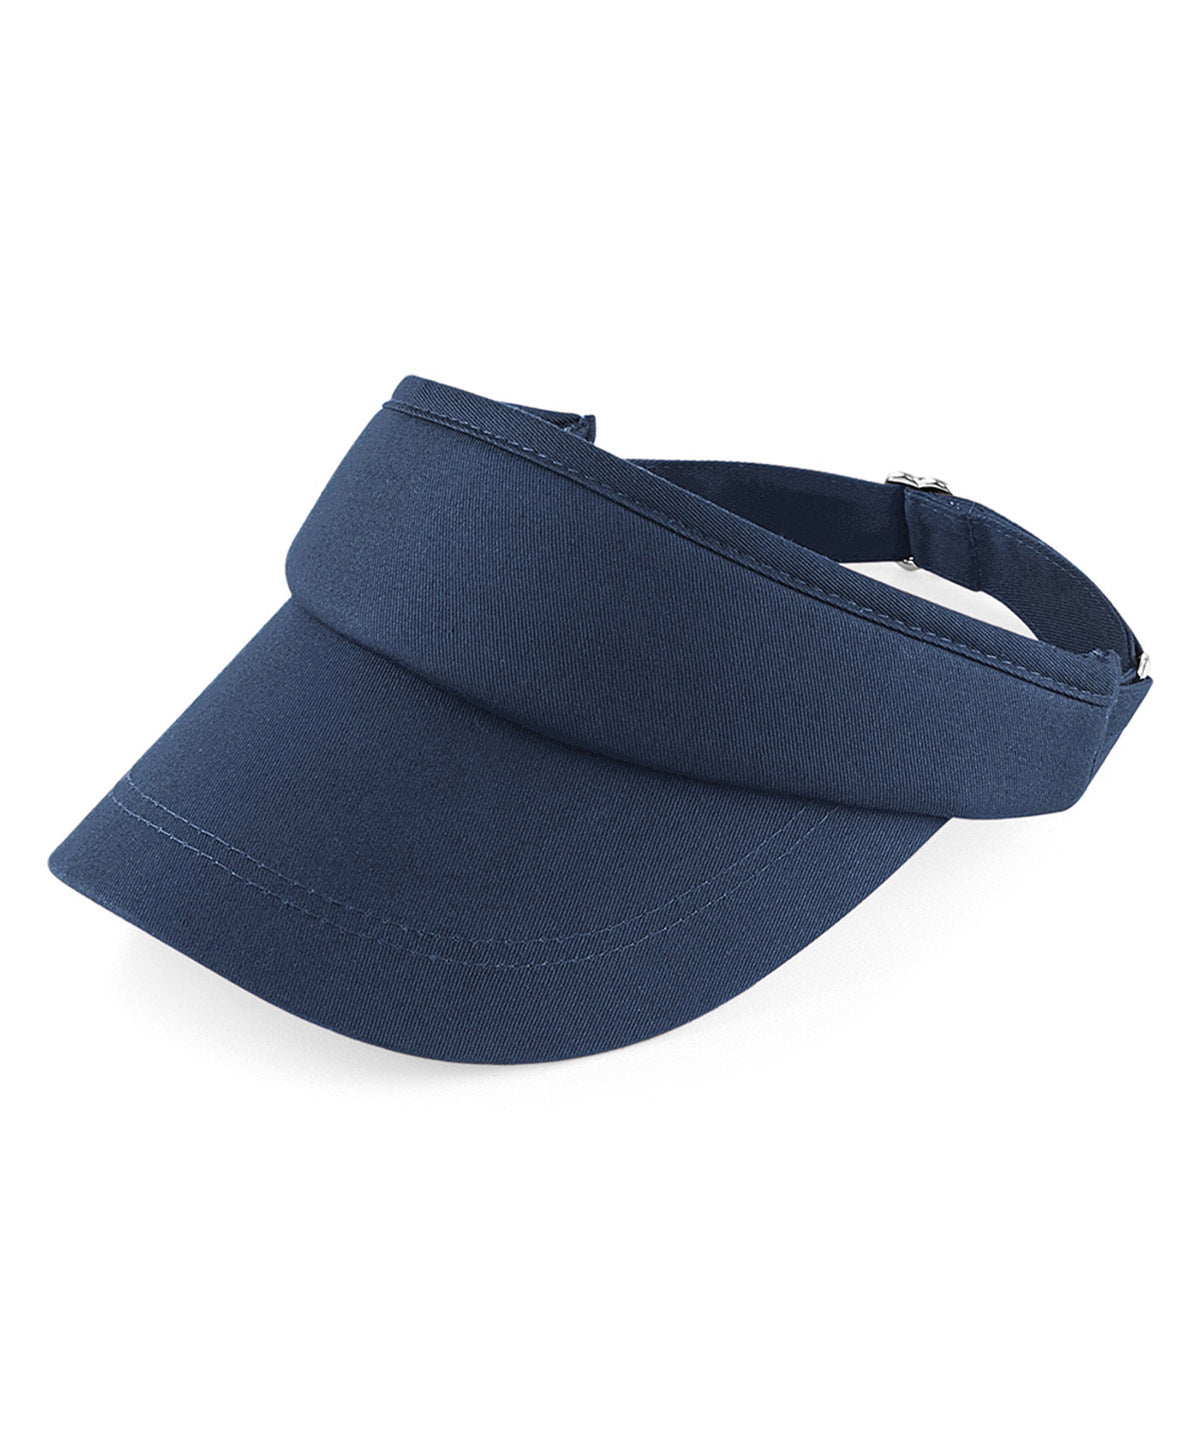 Personalised Caps - Navy Beechfield Sports visor